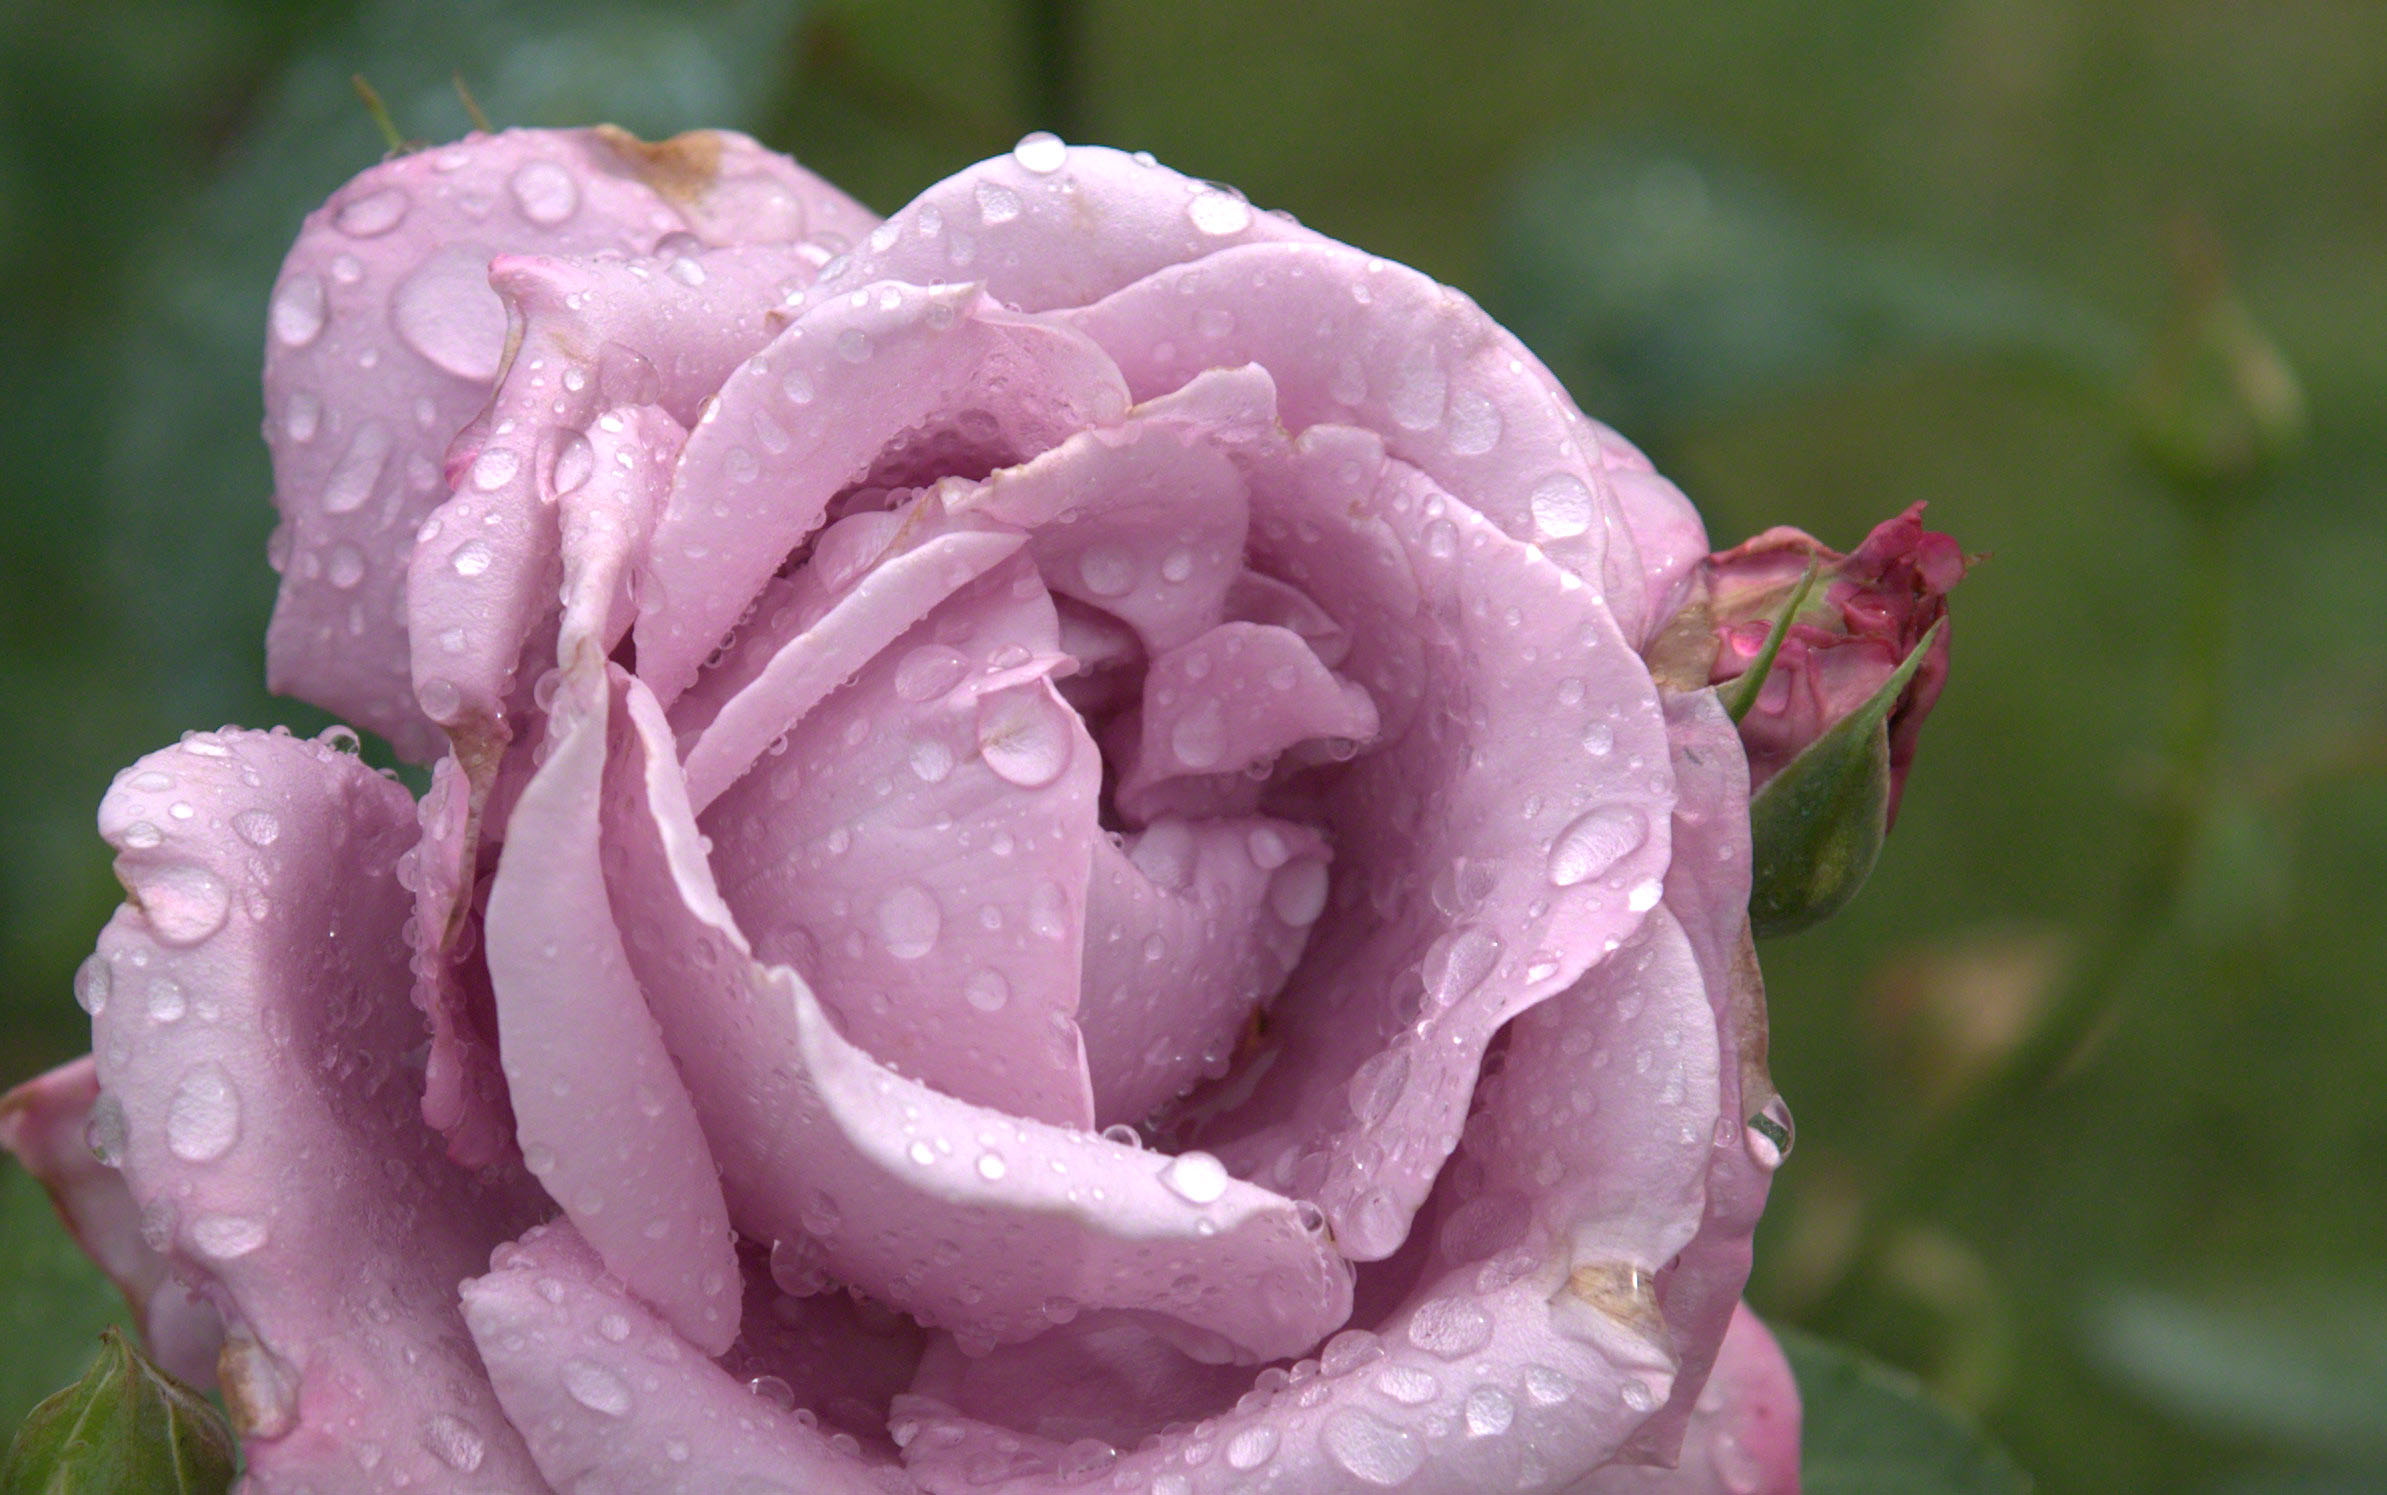 http://www.fabiovisentin.com/photography/photo/12/lilac-rose-raindrop-dsc04401.jpg